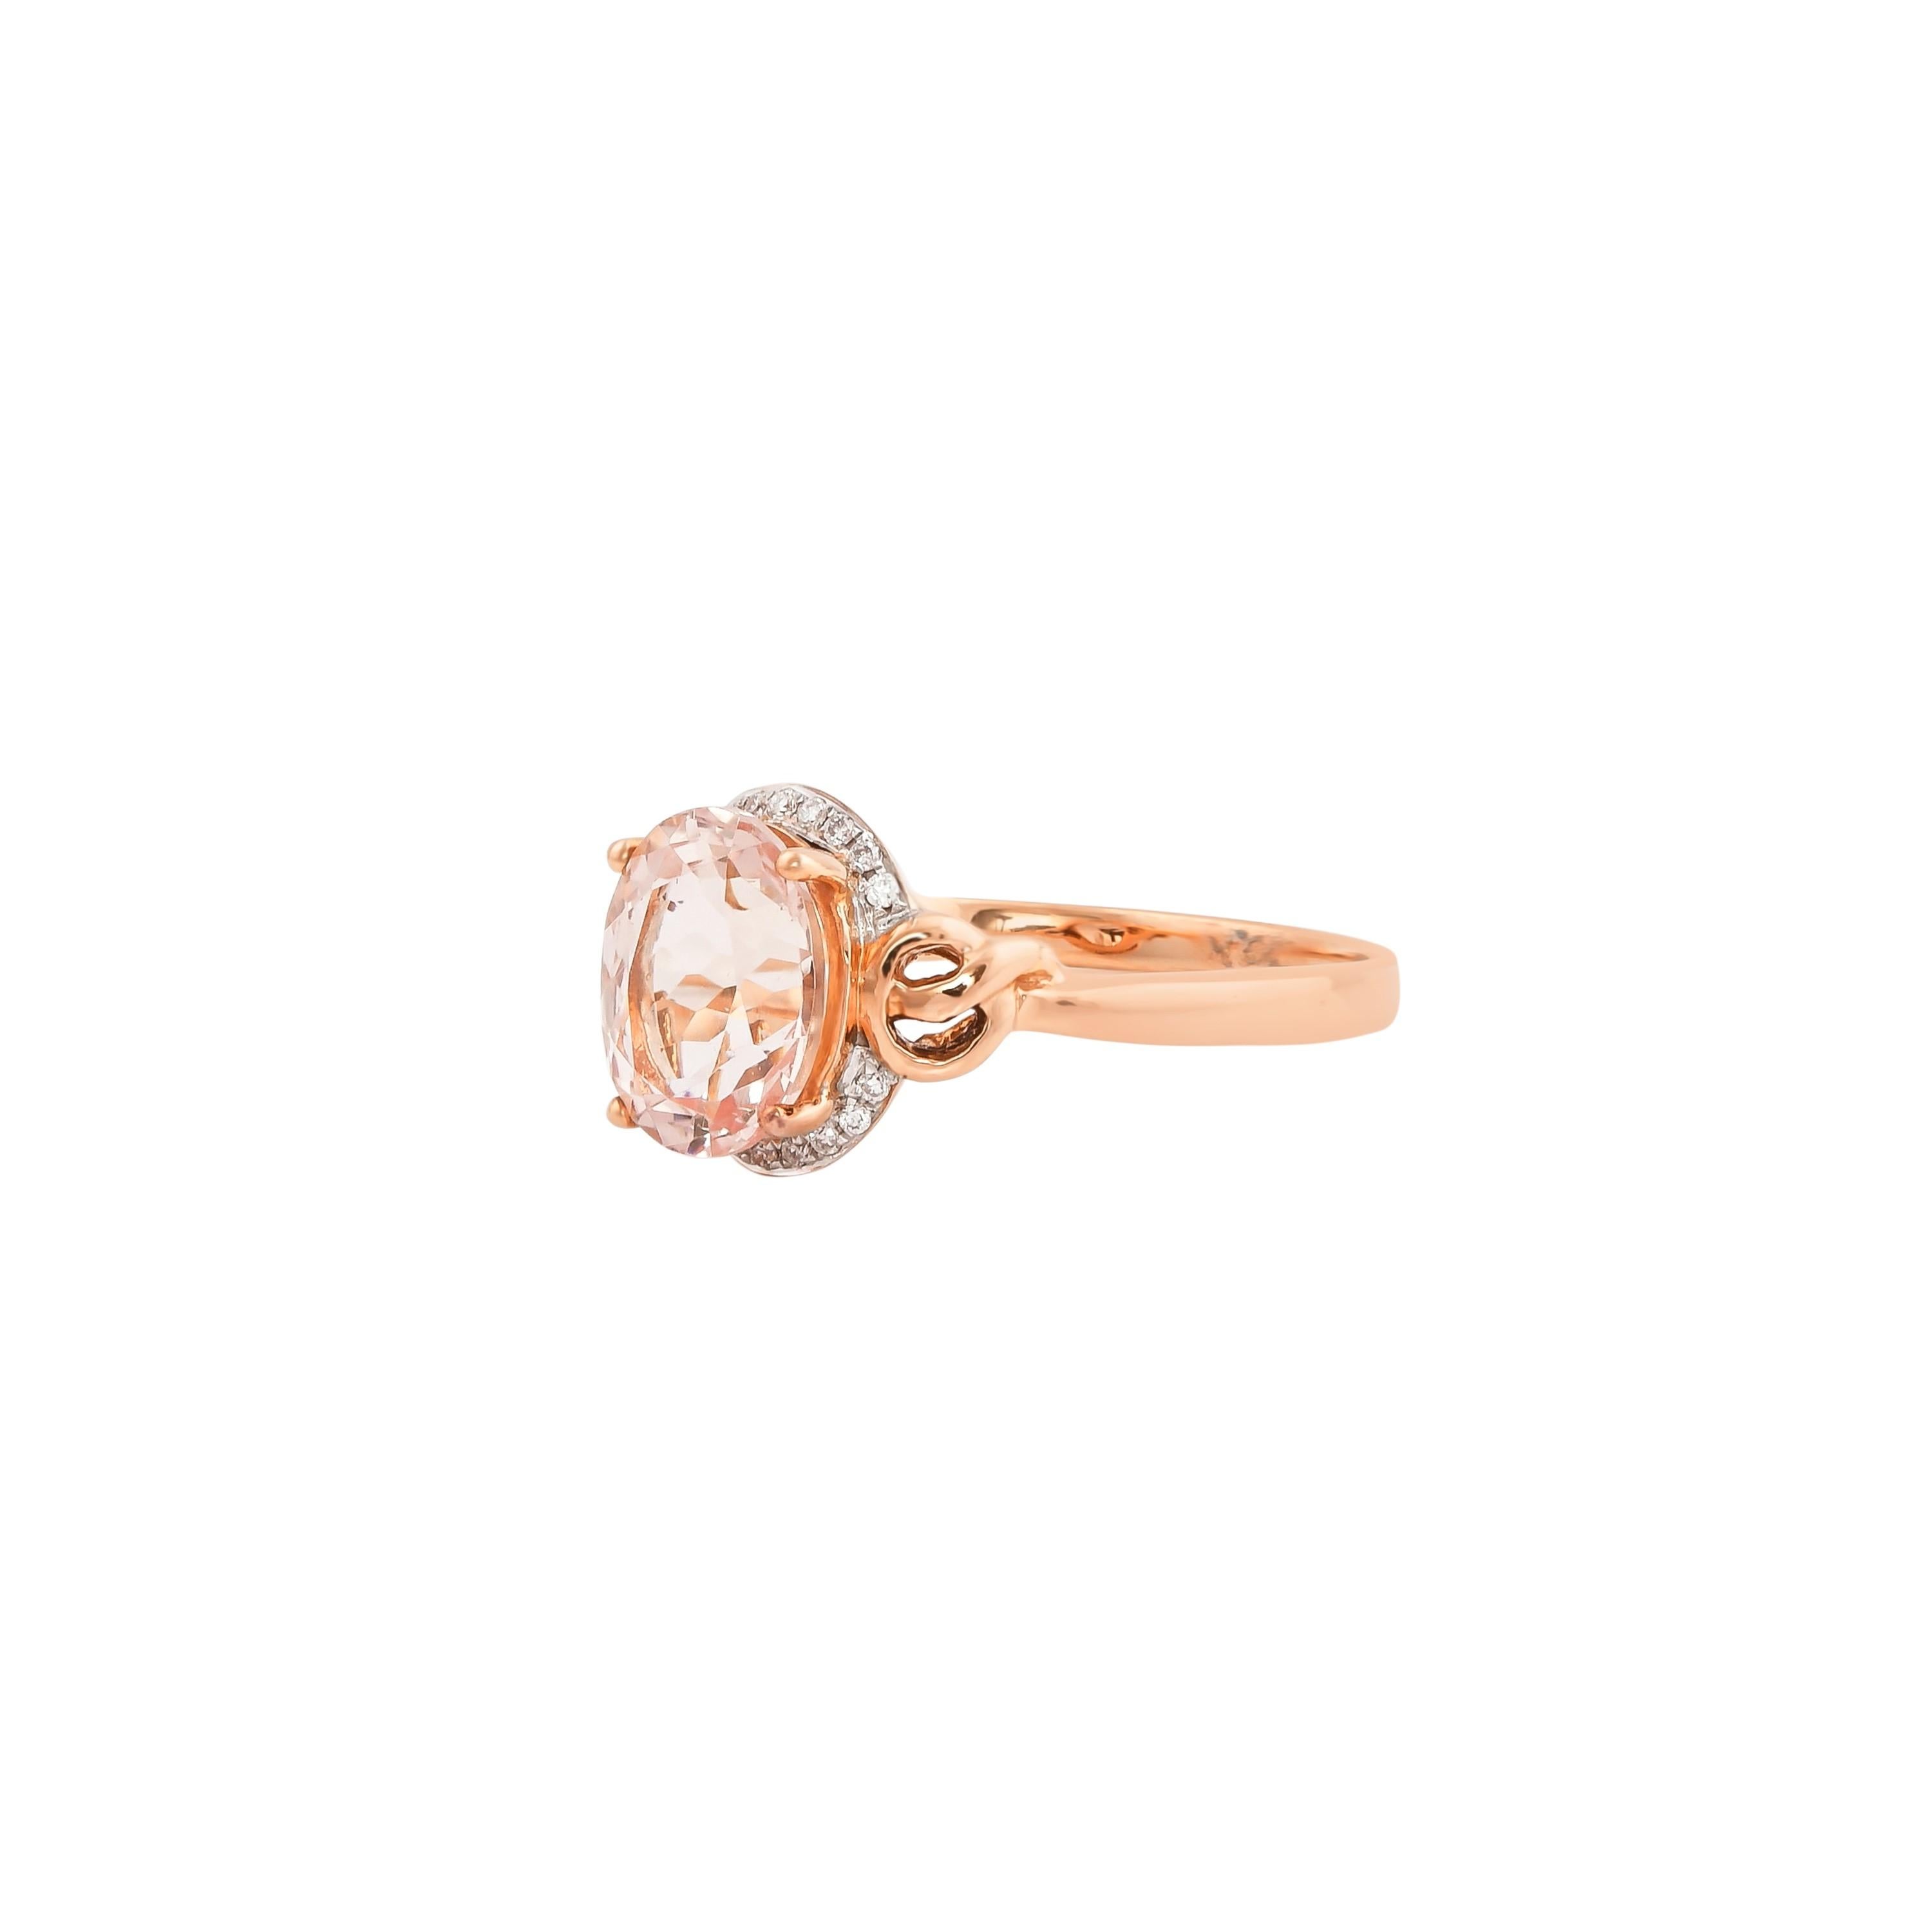 1.8 carat diamond ring